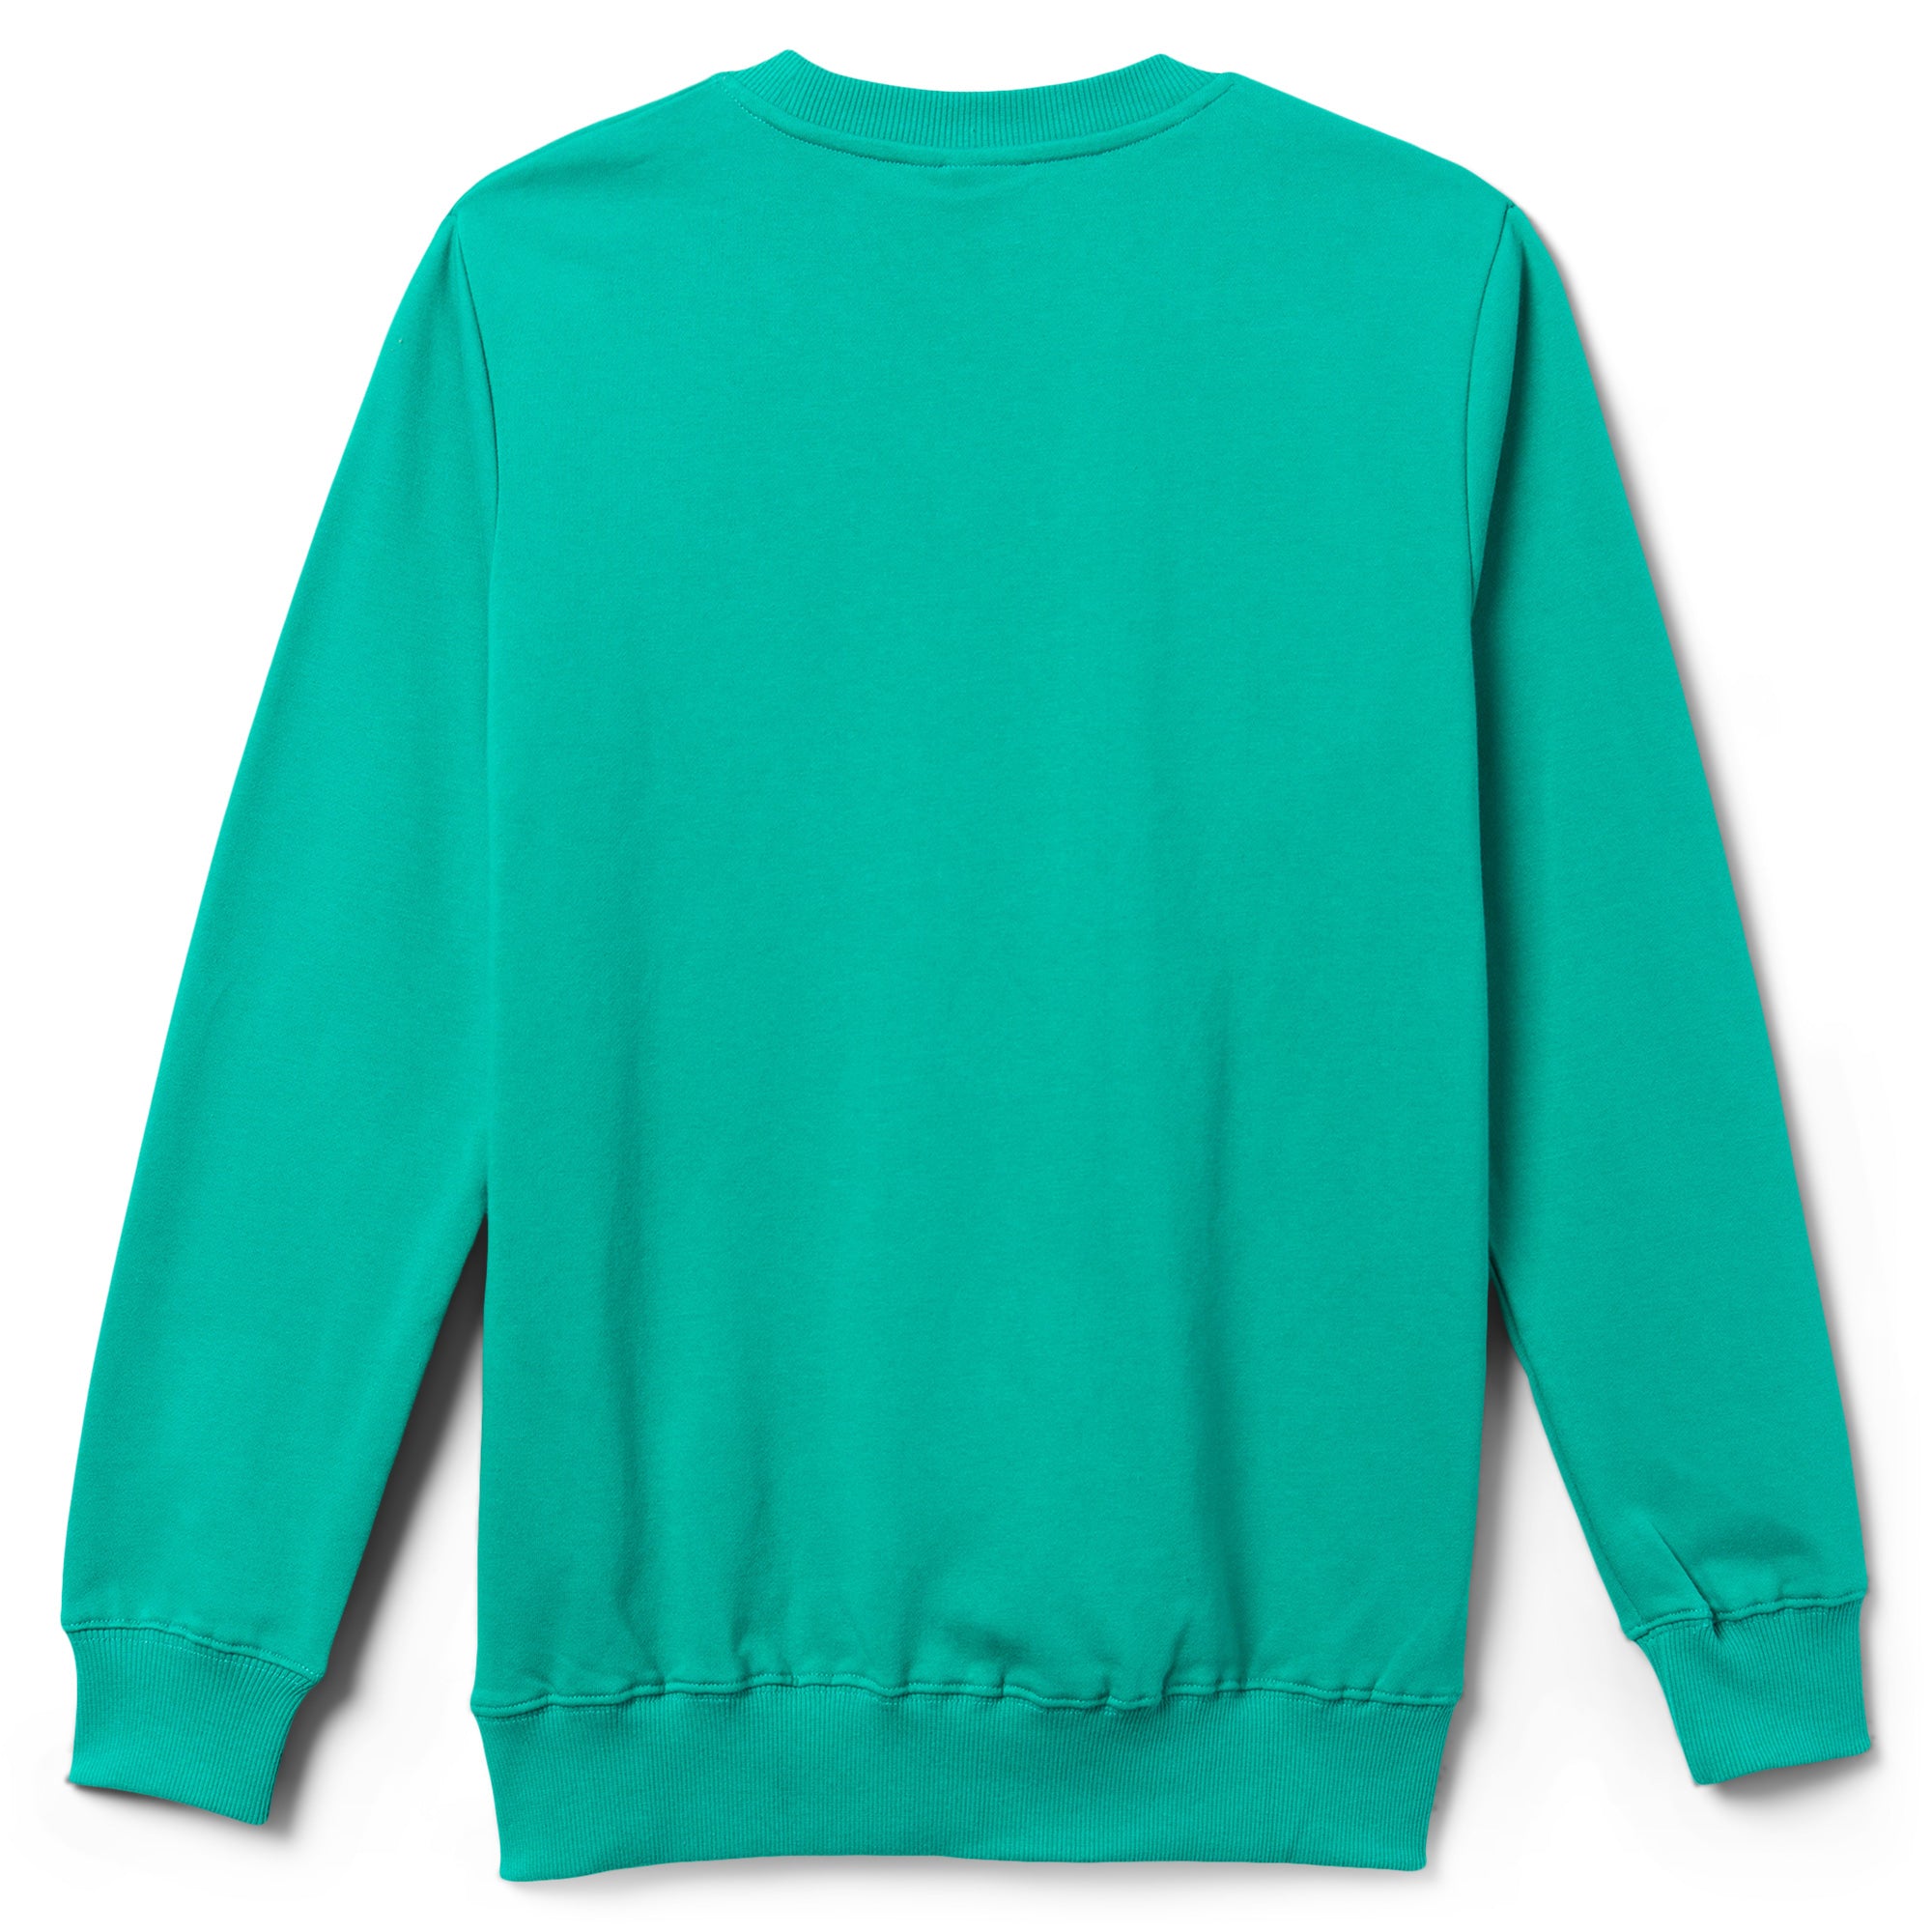 Keroppi Metallic Print Sweatshirt Green Apparel Global License   